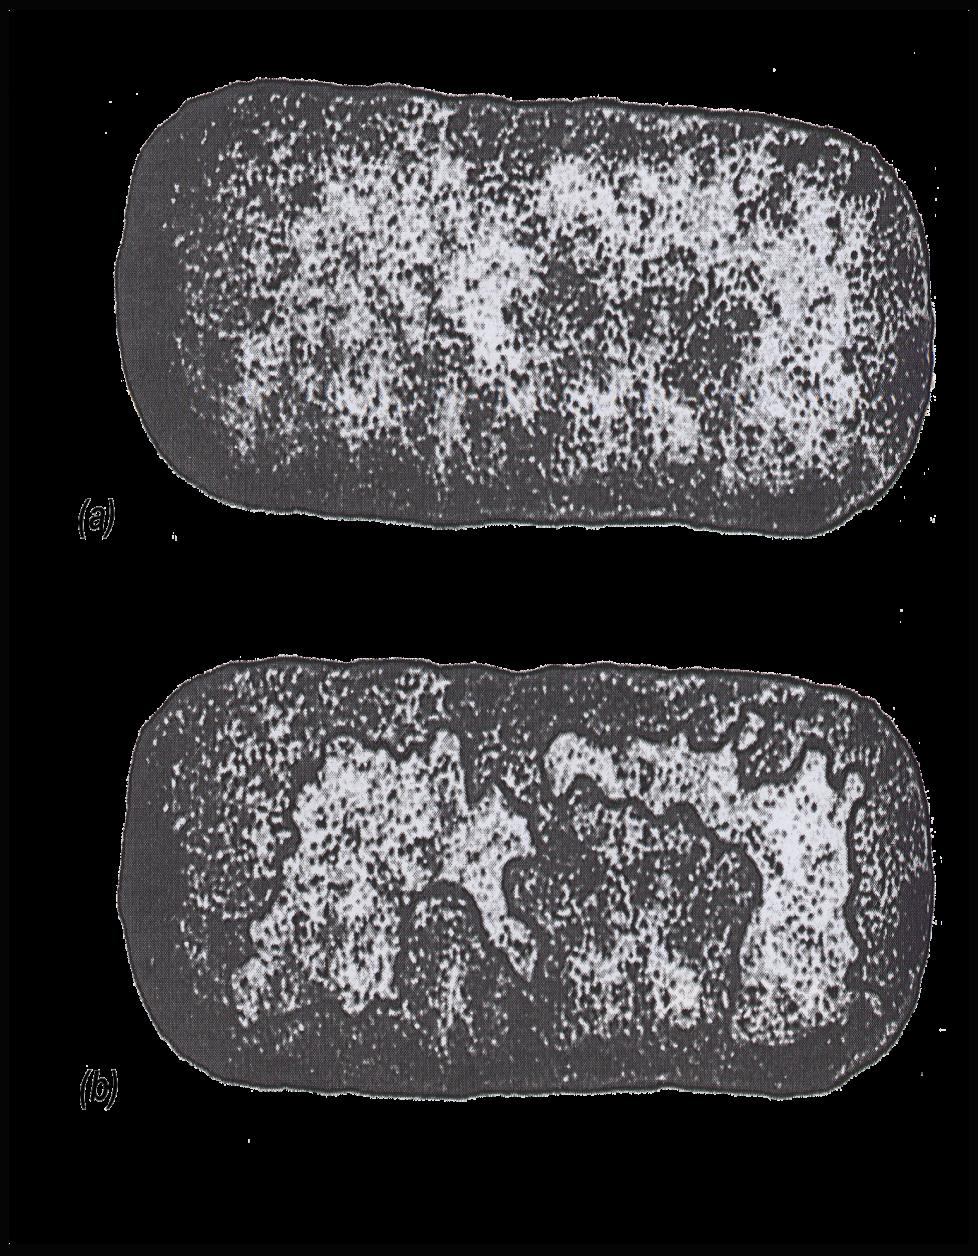 IL NUCLEOIDE BATTERICO Micrografia